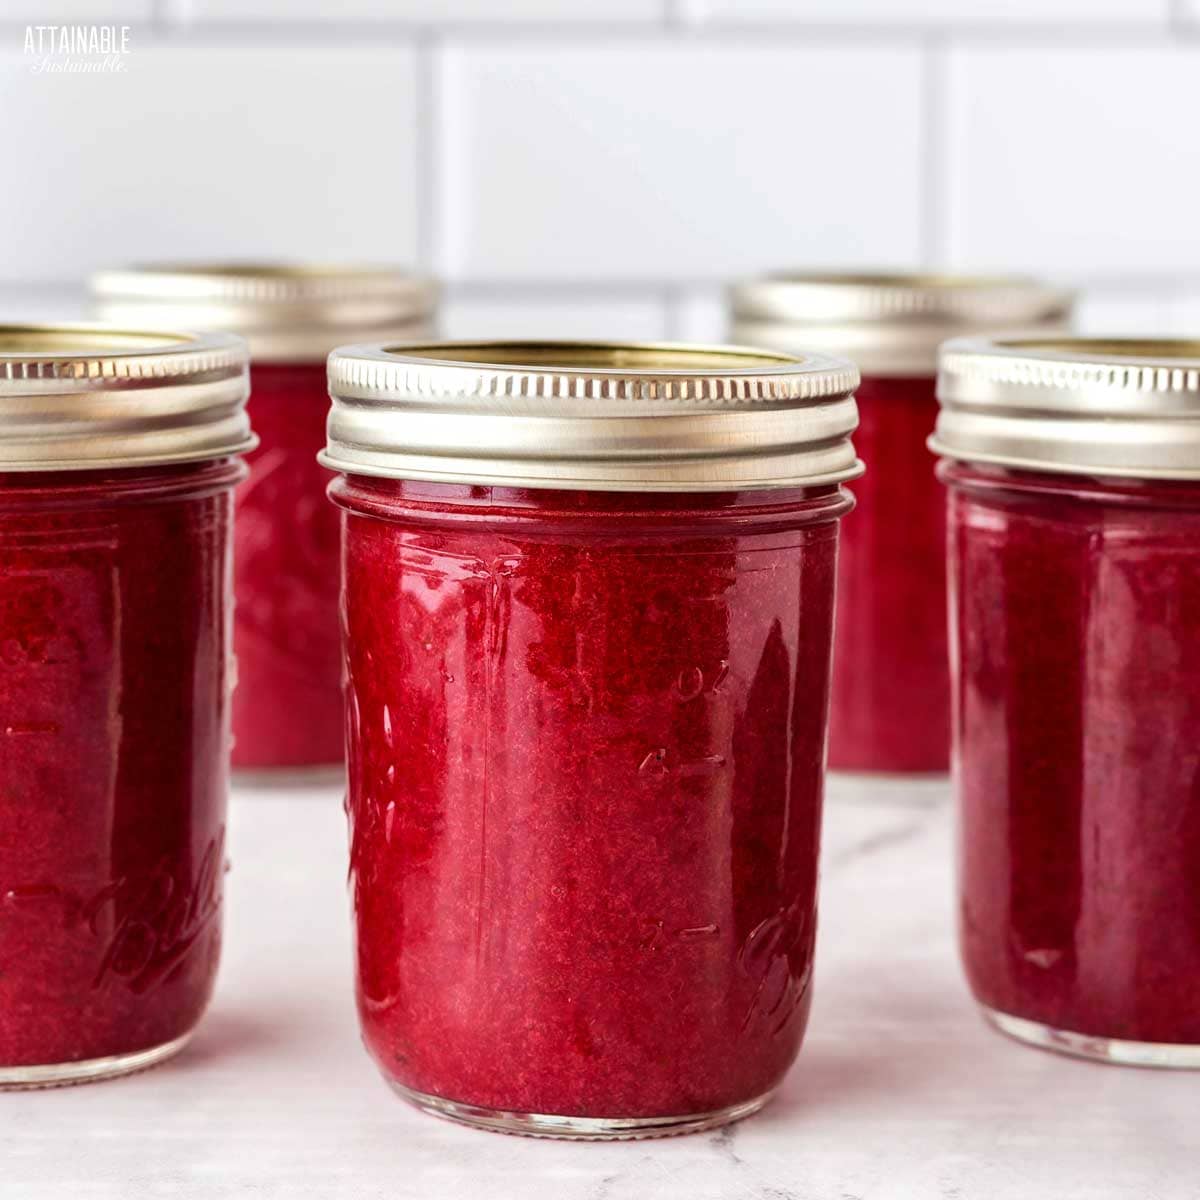 canning jars of plum jam.